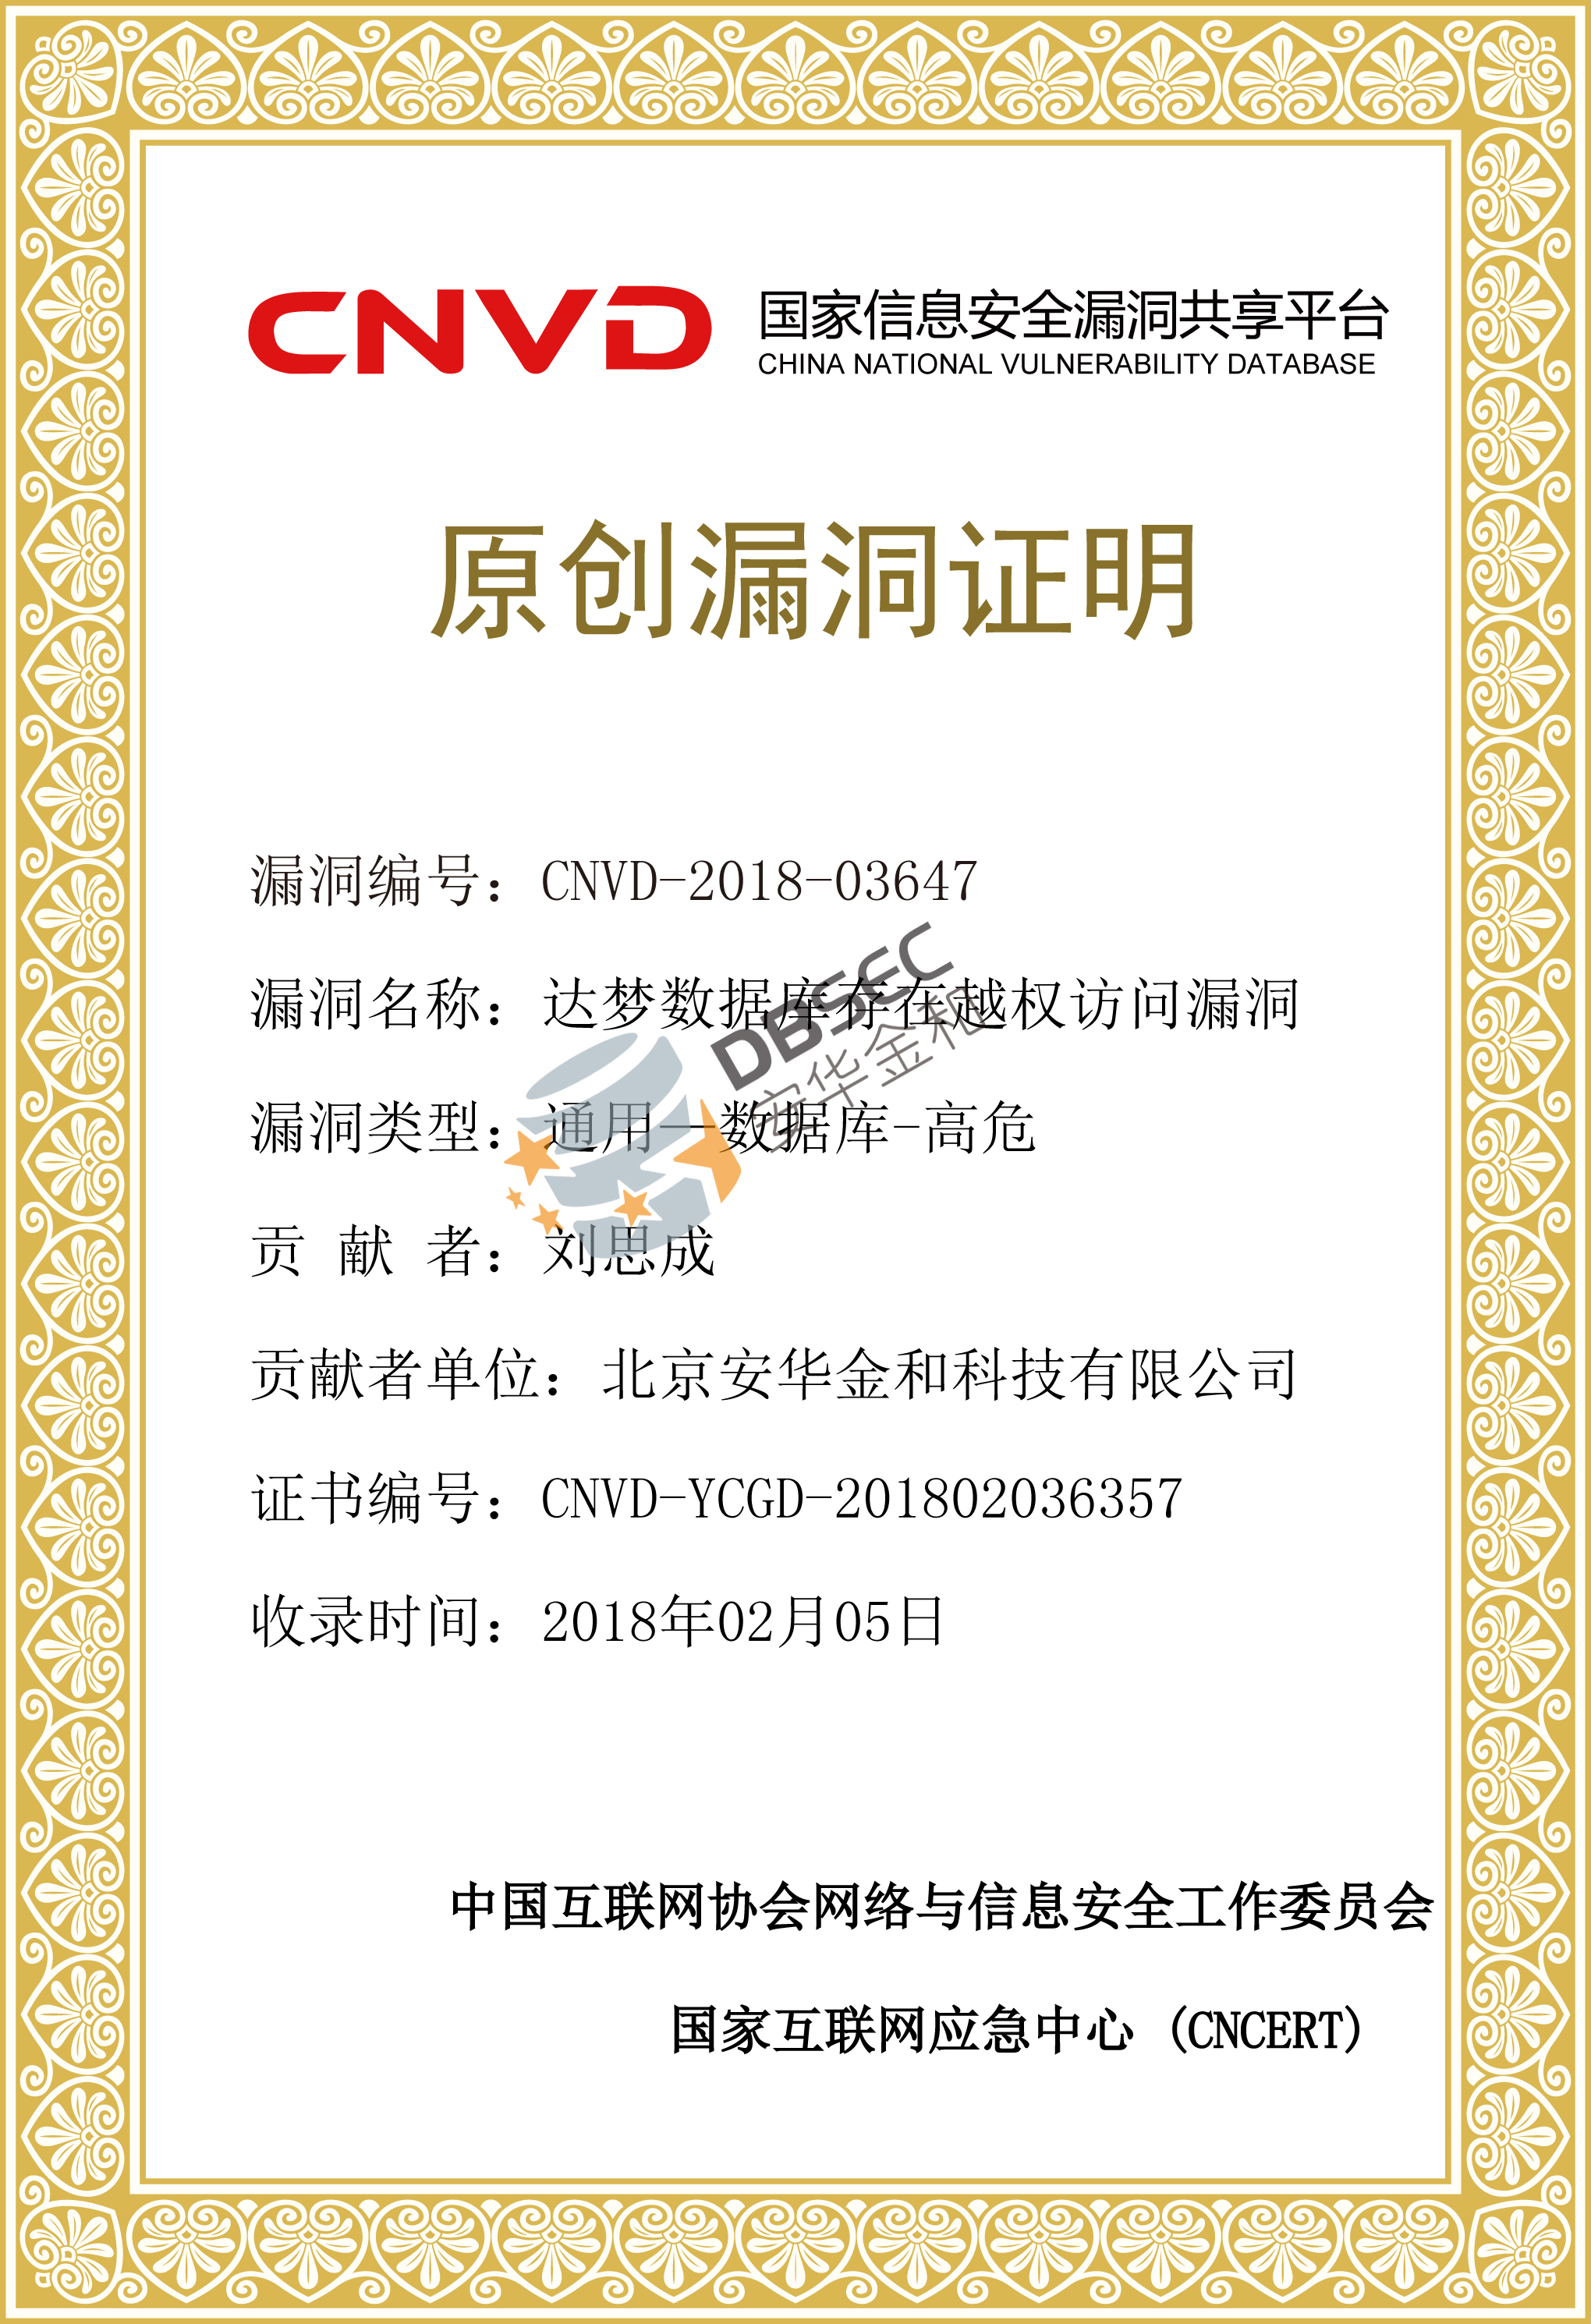 CNVD-YCGD-201802036357